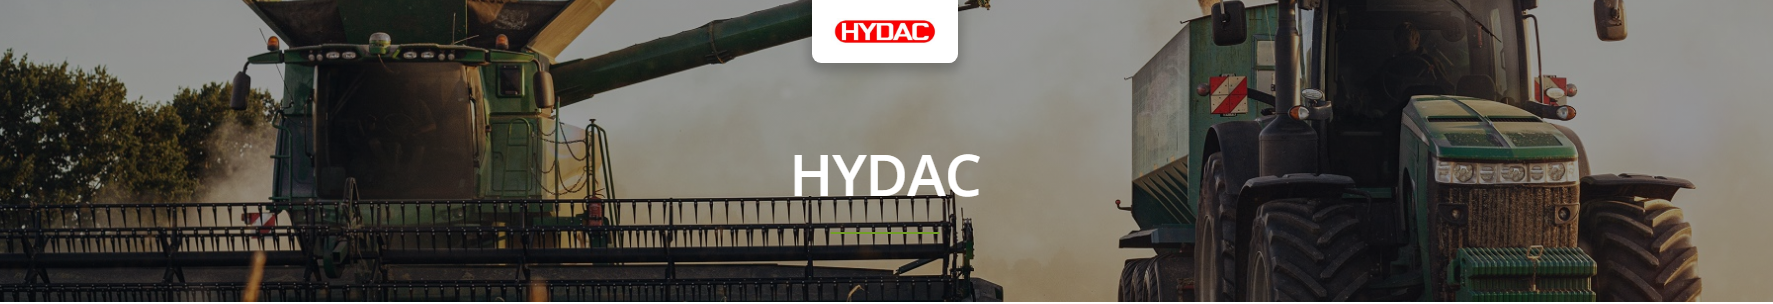 Hydac Mobile Valves